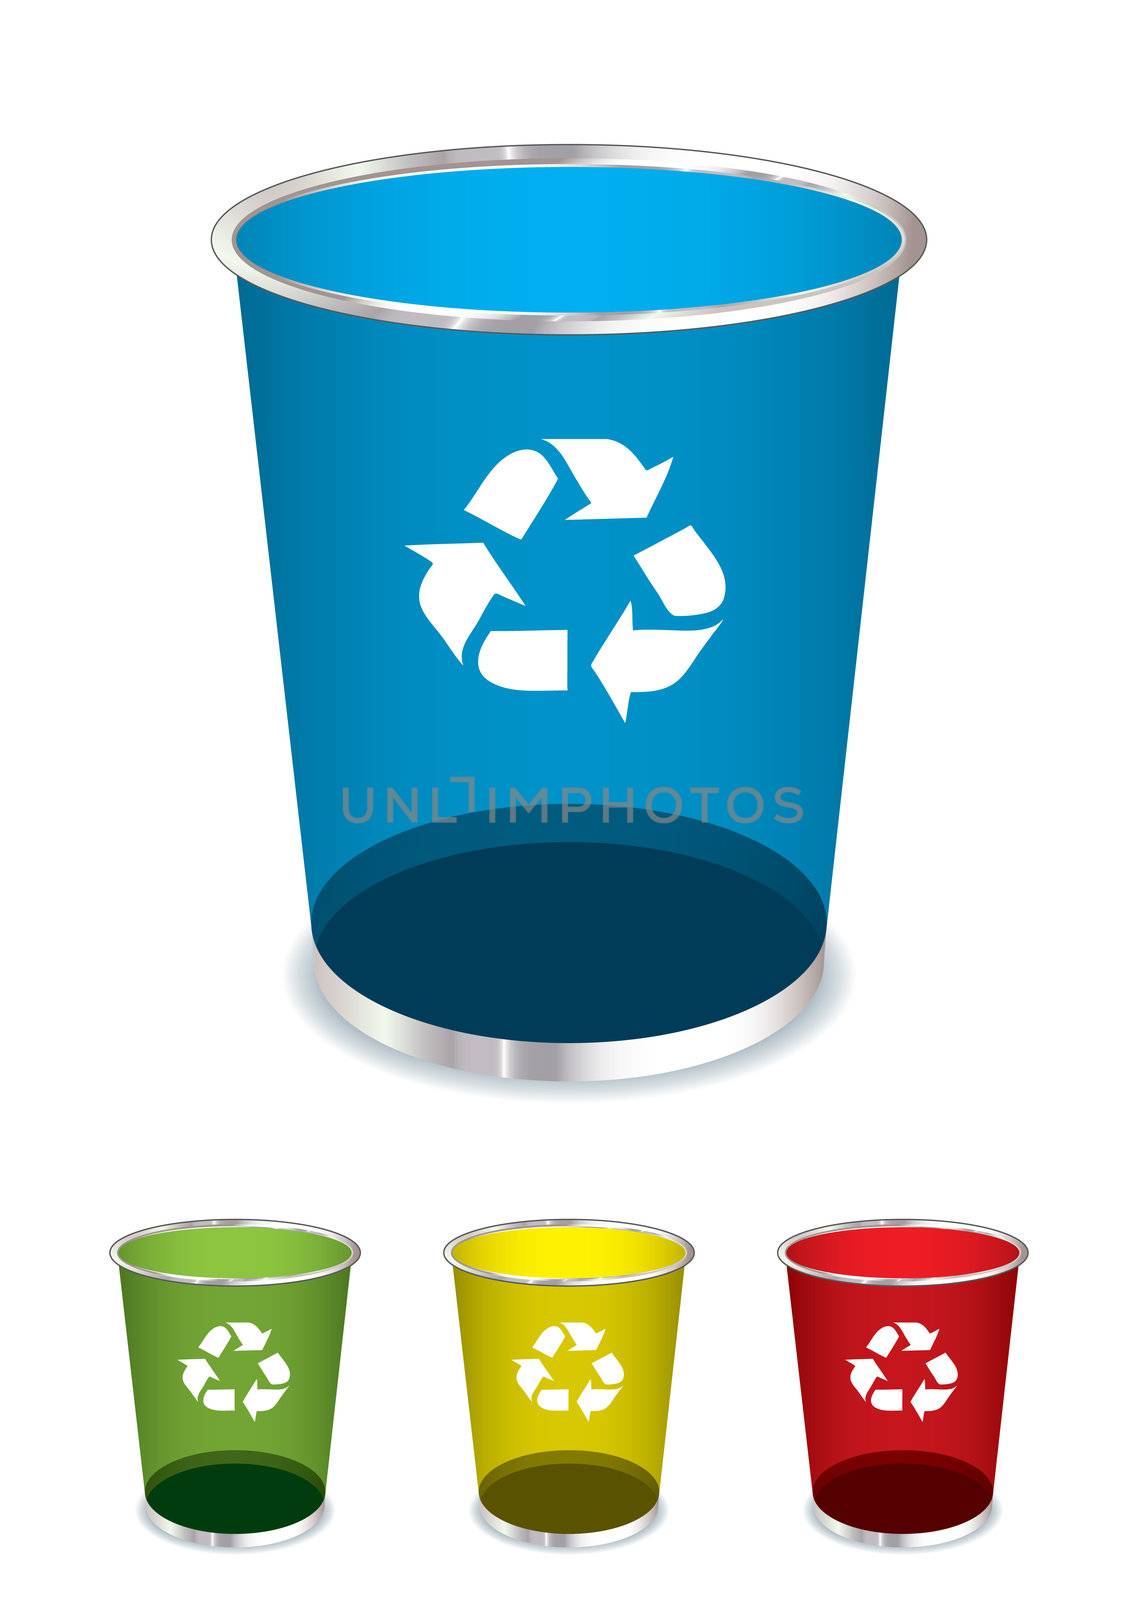 Trash recycle bin by nicemonkey